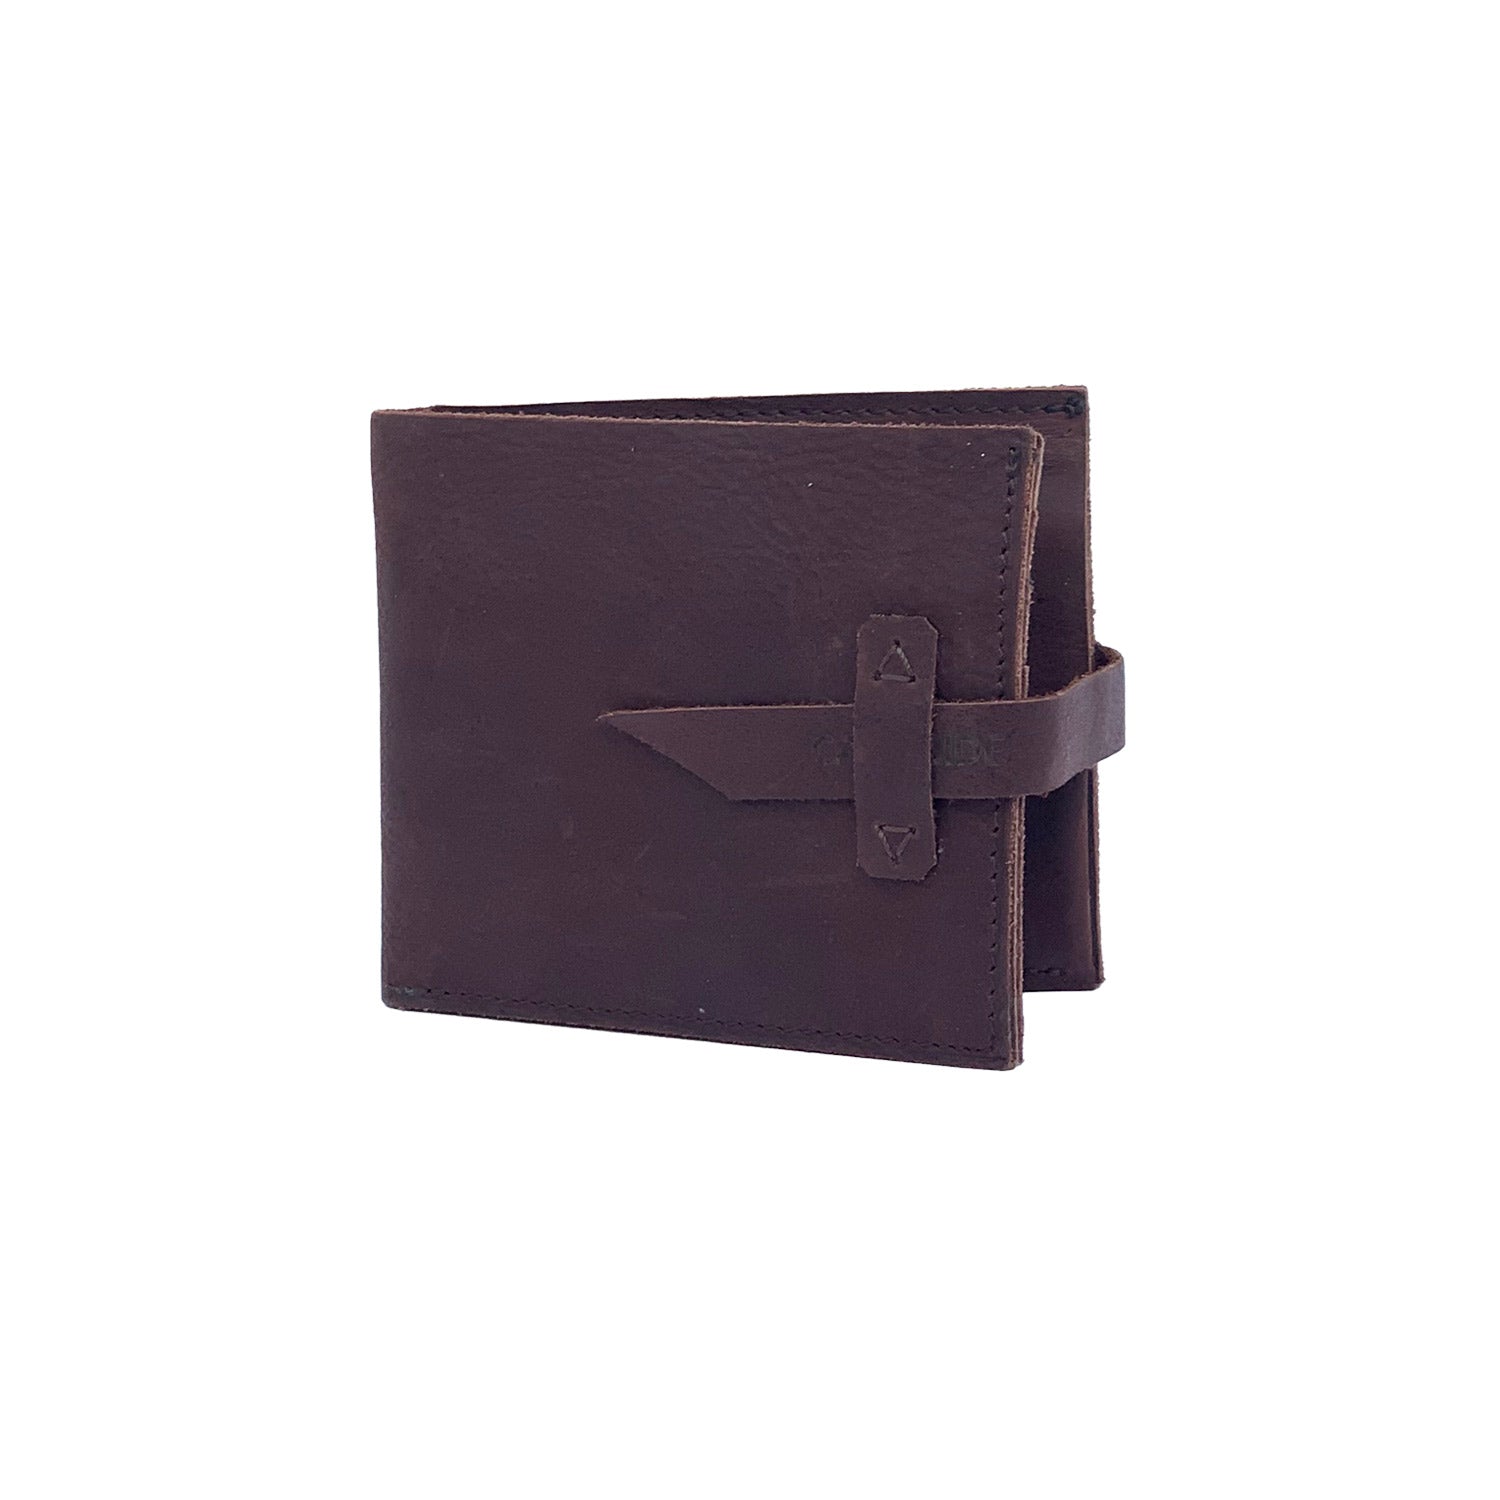 Asturcon Leather Wallet